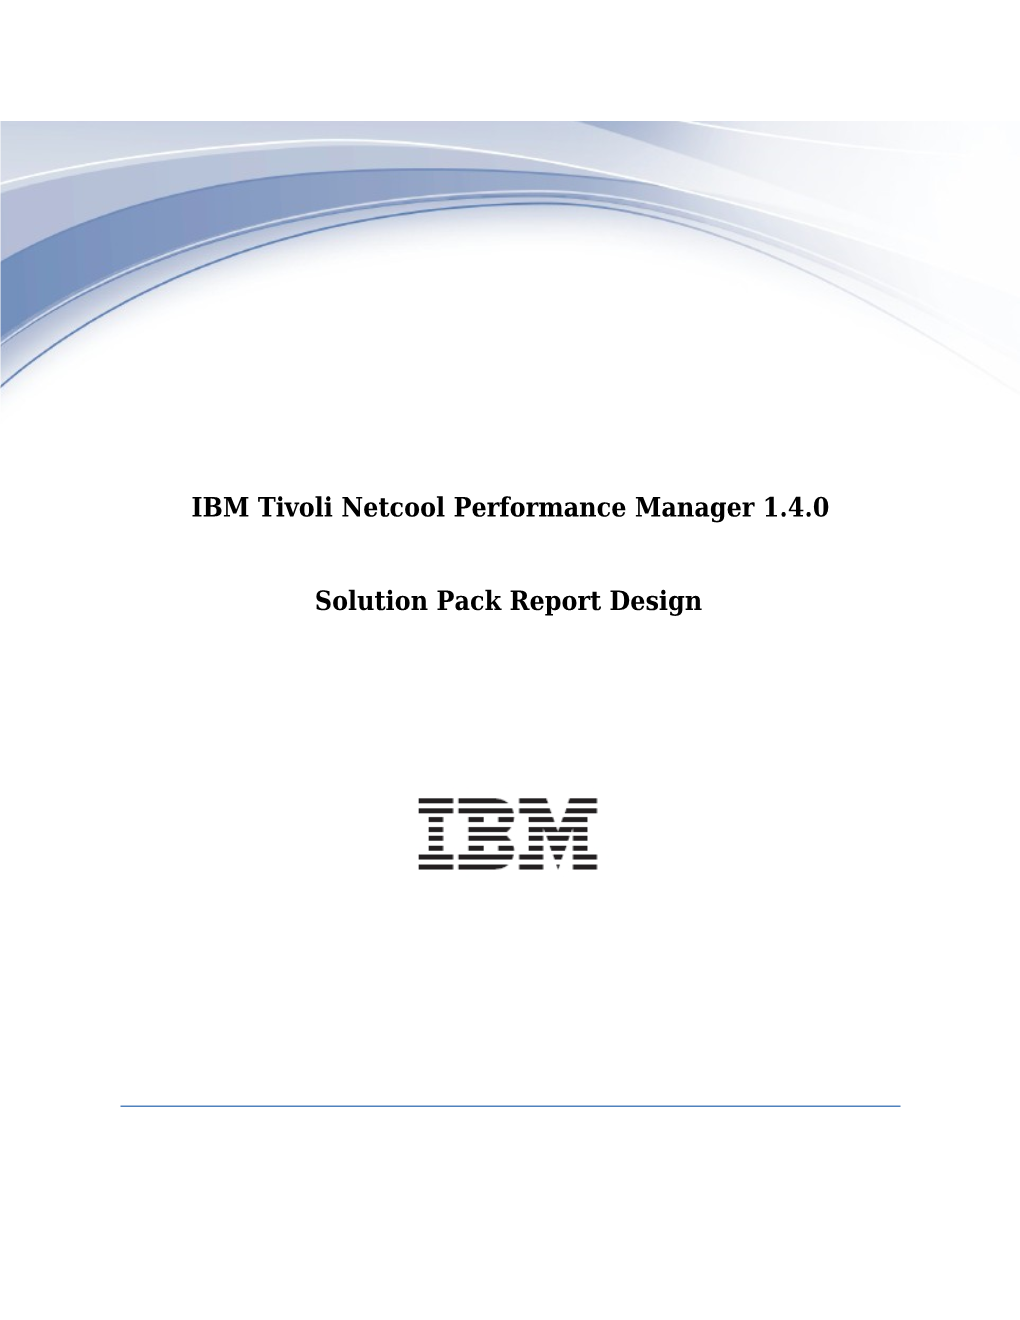 IBM Tivoli Netcool Performance Manager 1.4.0